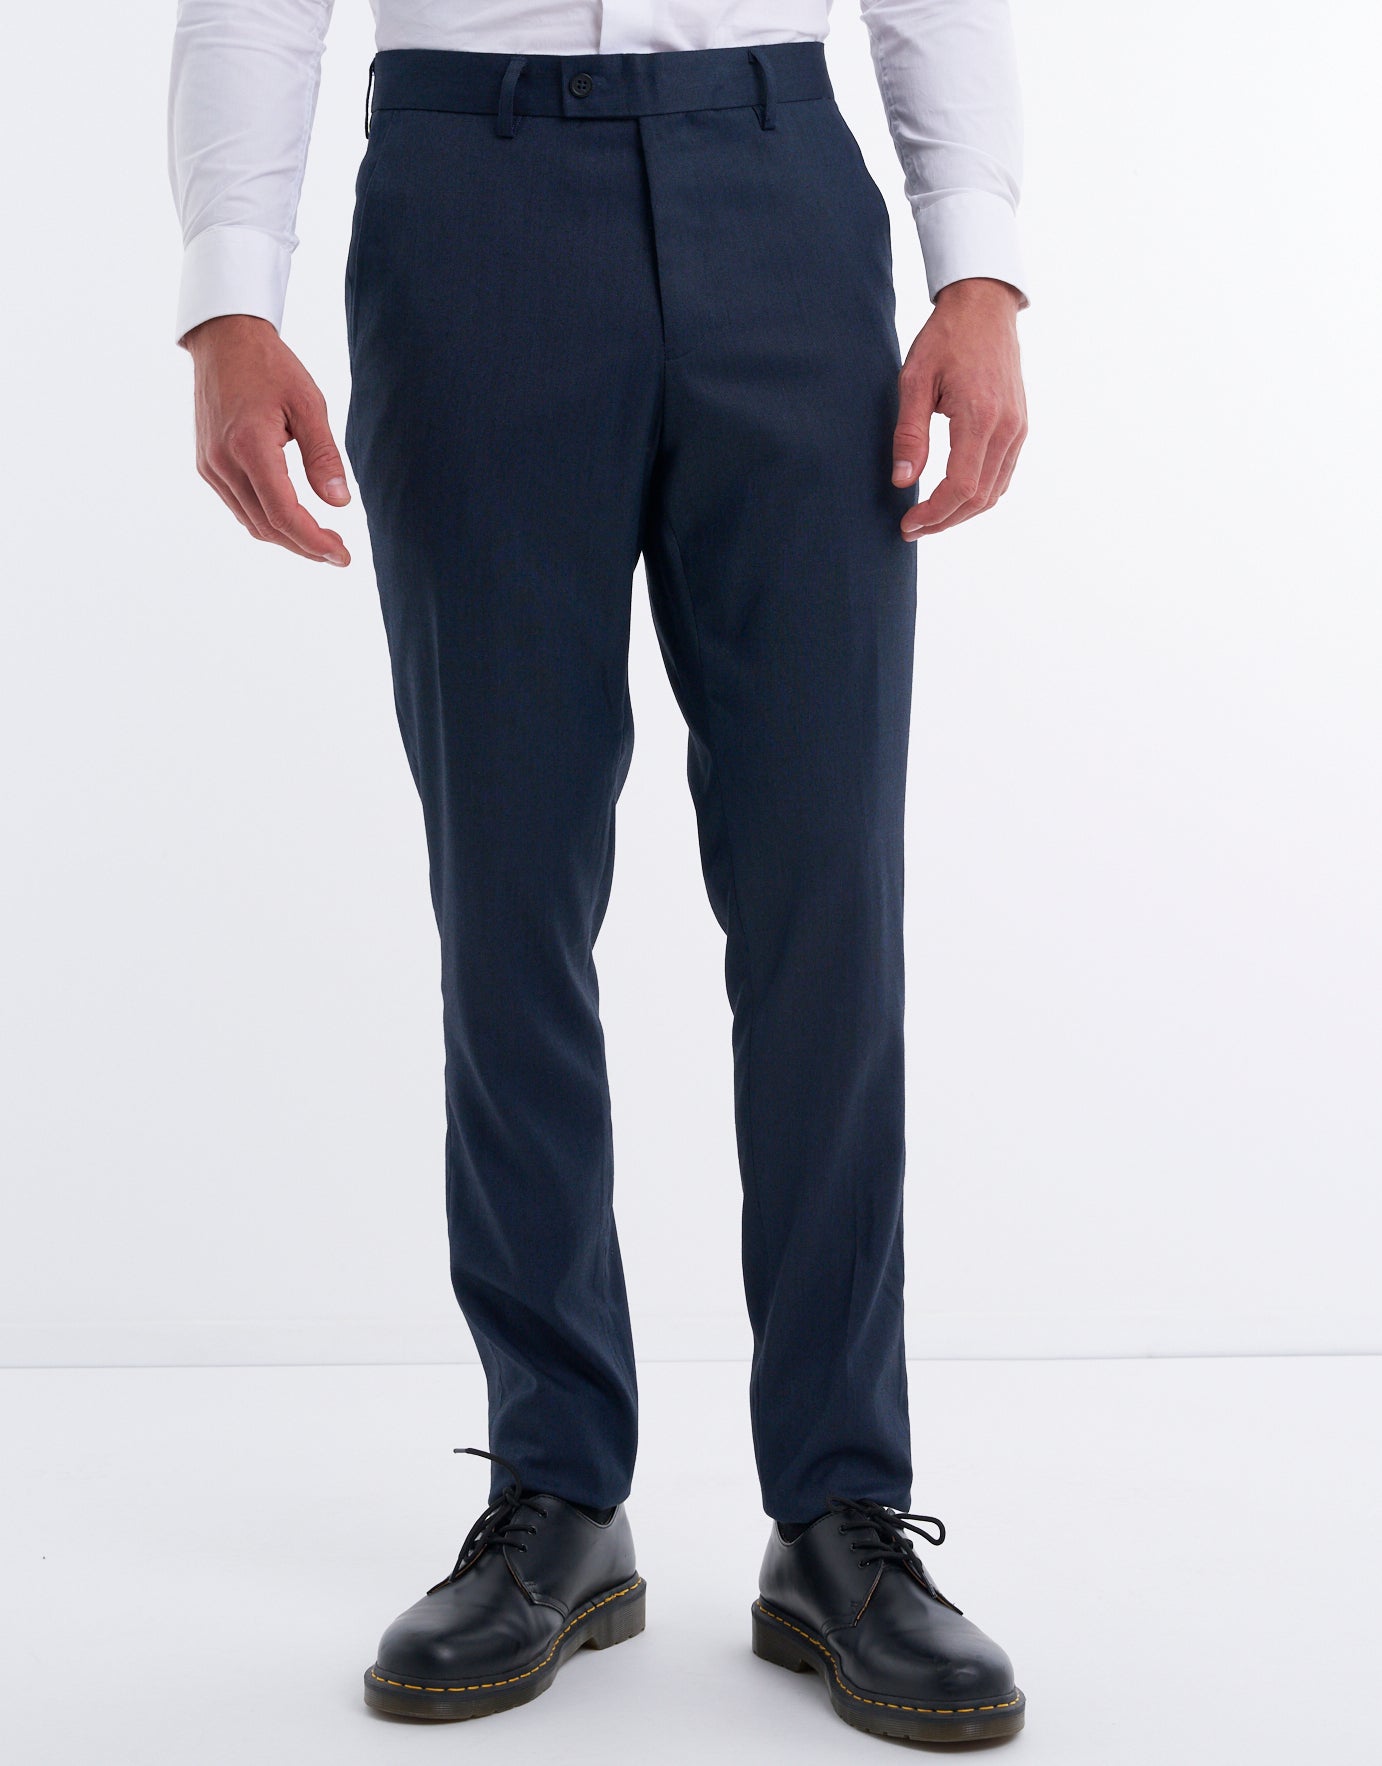 Baby Boys' Gentleman Clothes Sets Bow Tie Shirts + Suspender Pants (Navy  Blue Shirt + Khaki pants, 2-3 Years) - Walmart.com